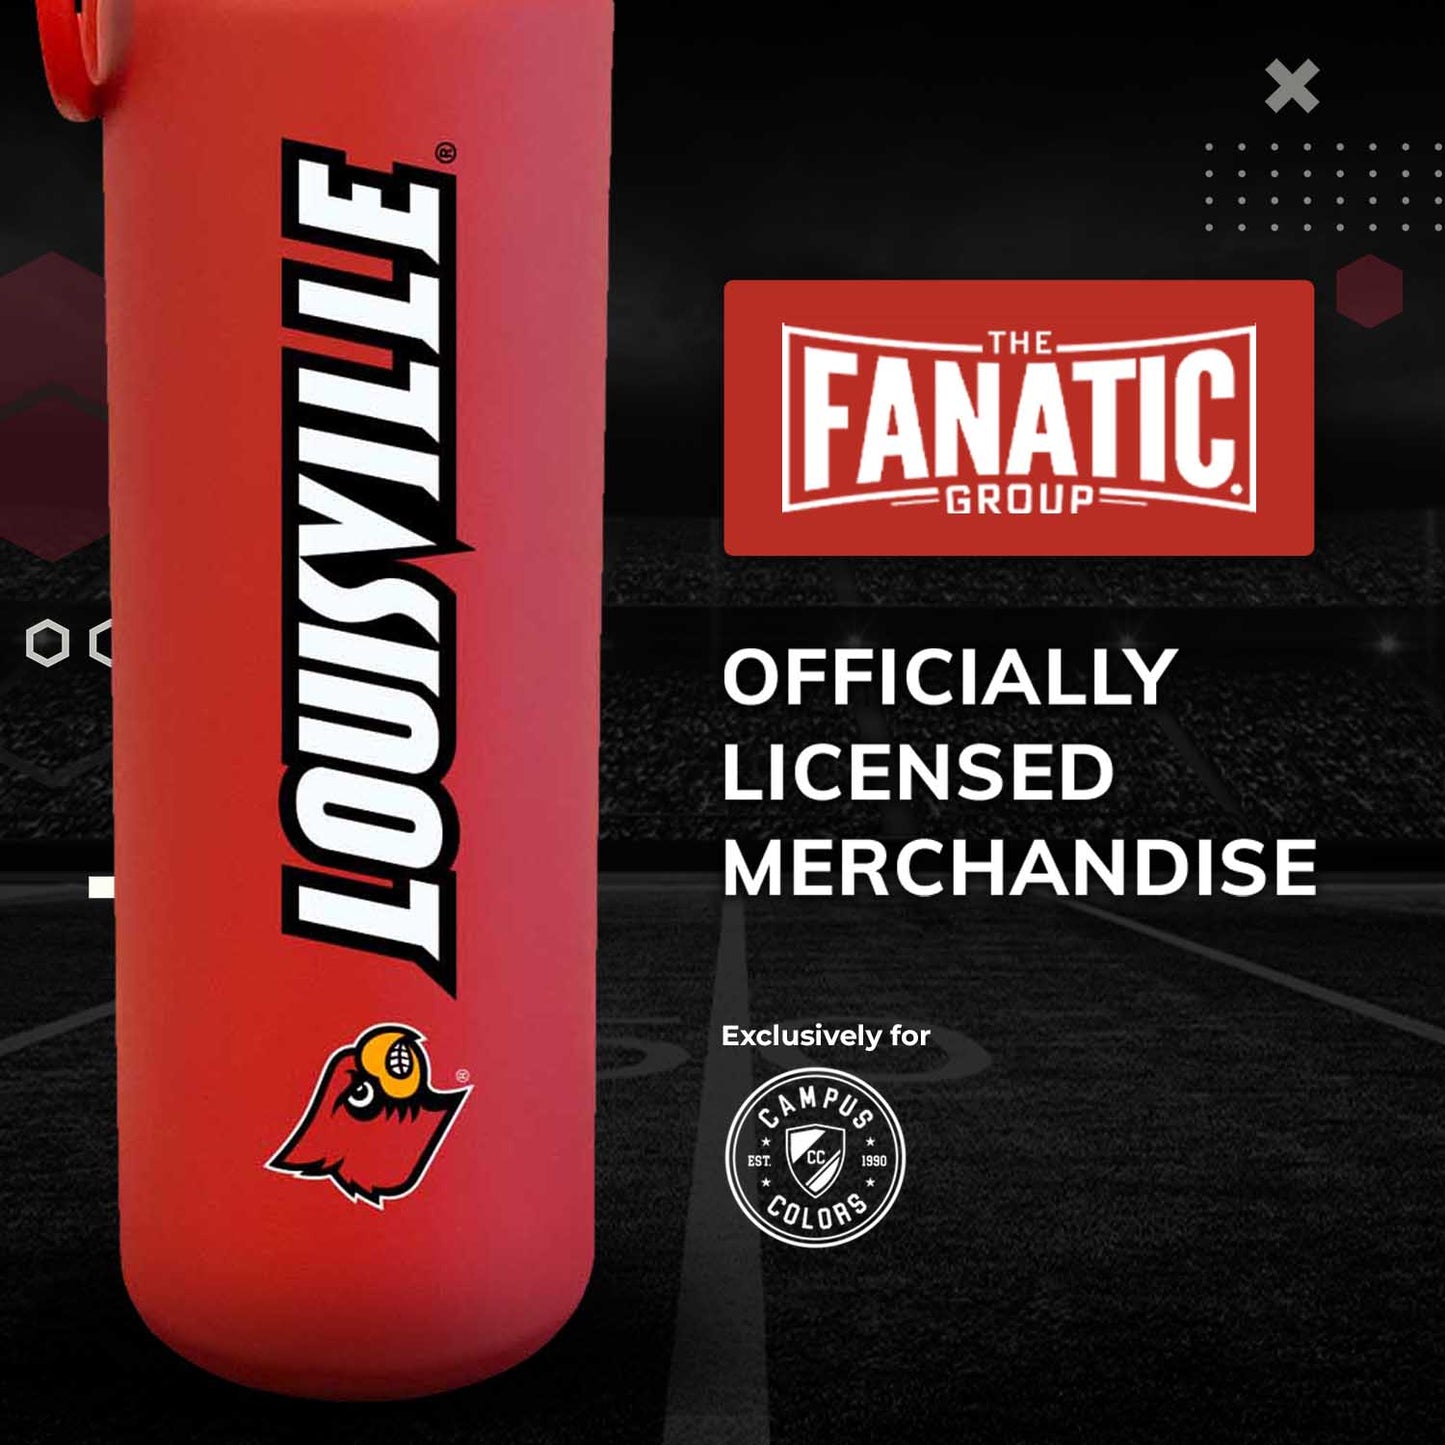 Louisville Cardinals NCAA Stainless Steel Water Bottle - Red